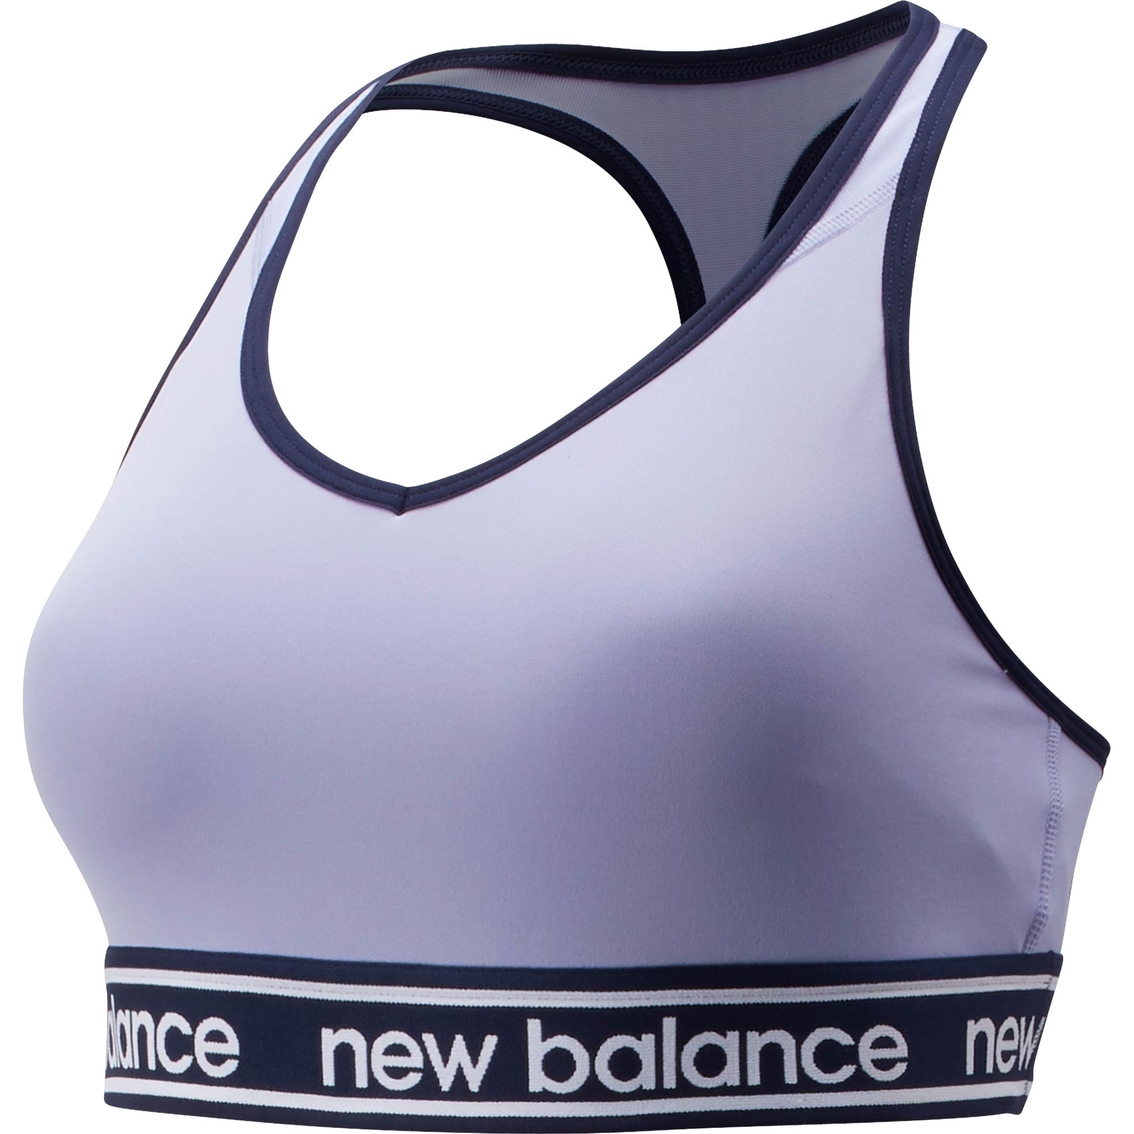 New Balance Pace Bra 2.0, Bras, Clothing & Accessories